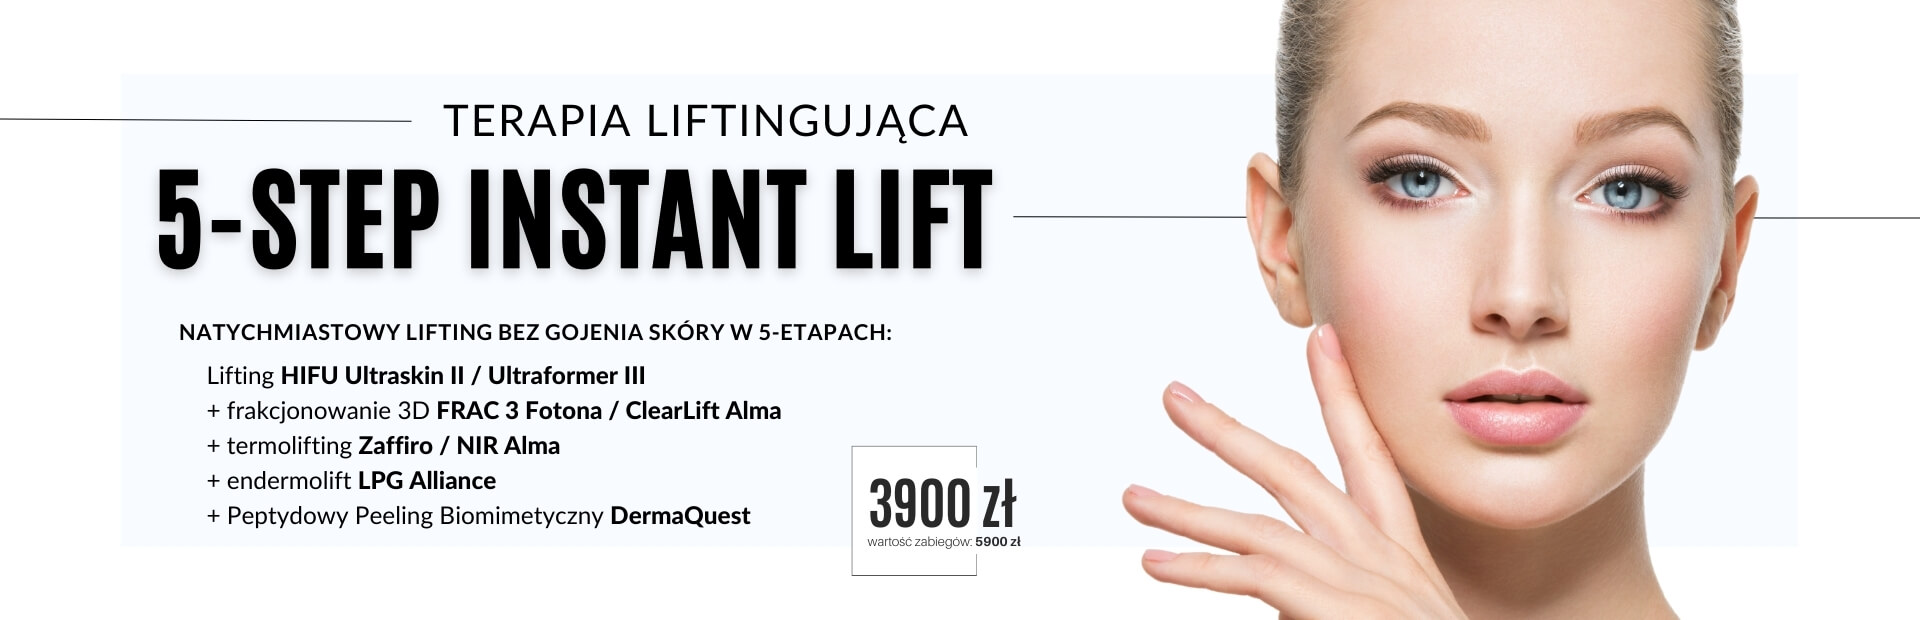 Instant Lift lifting HIFU, ultraskin ultraformer FRAC Fotona